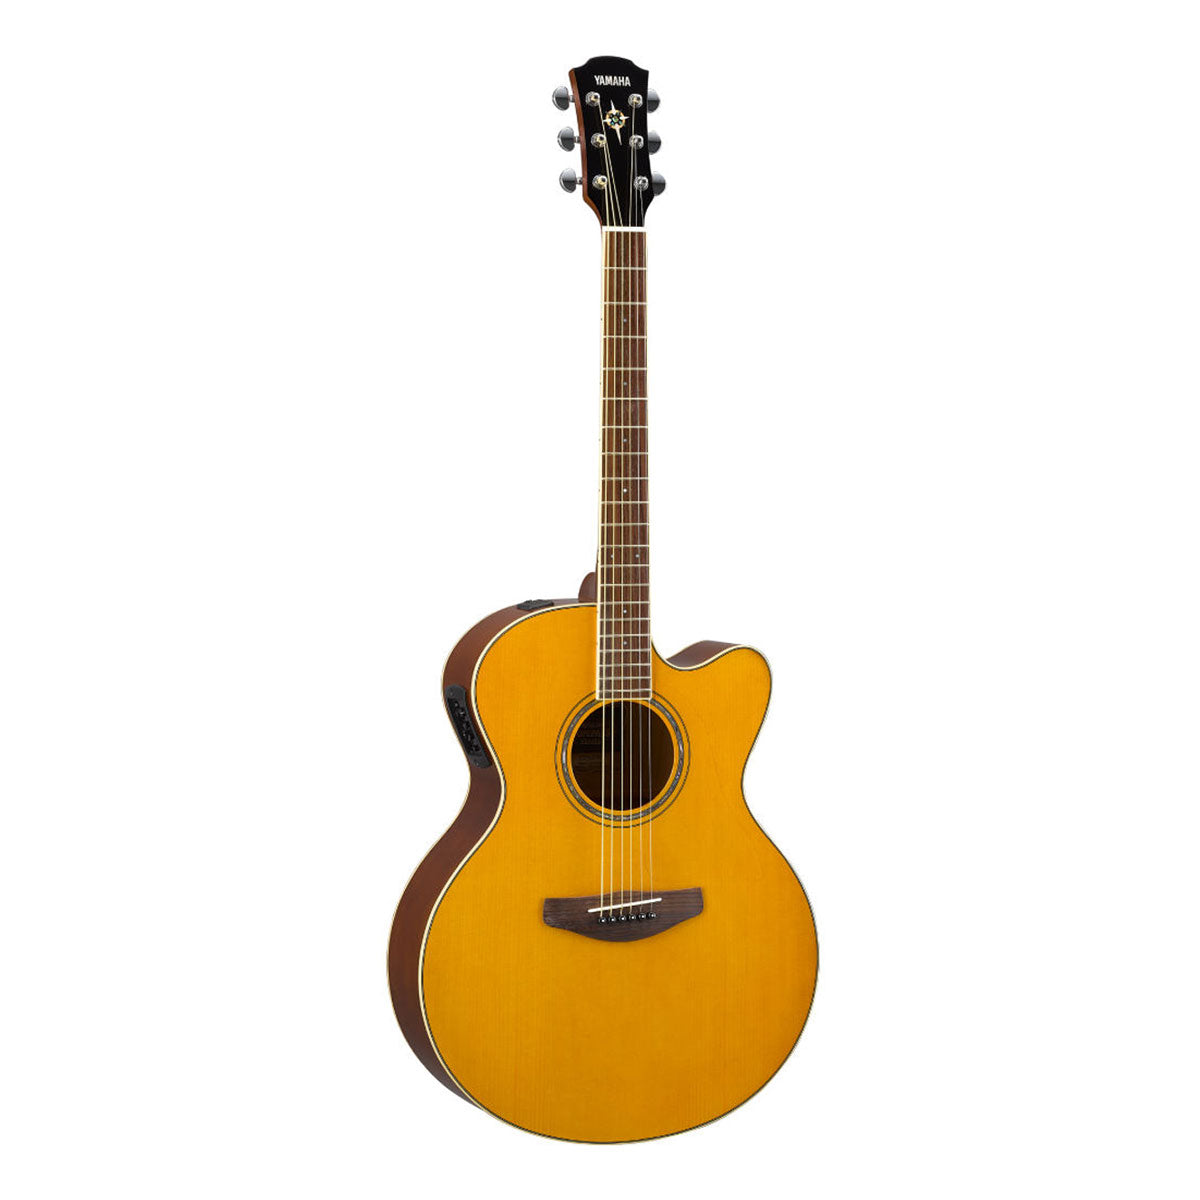 Yamaha CPX600 Vintage Tint Acoustic Guitar